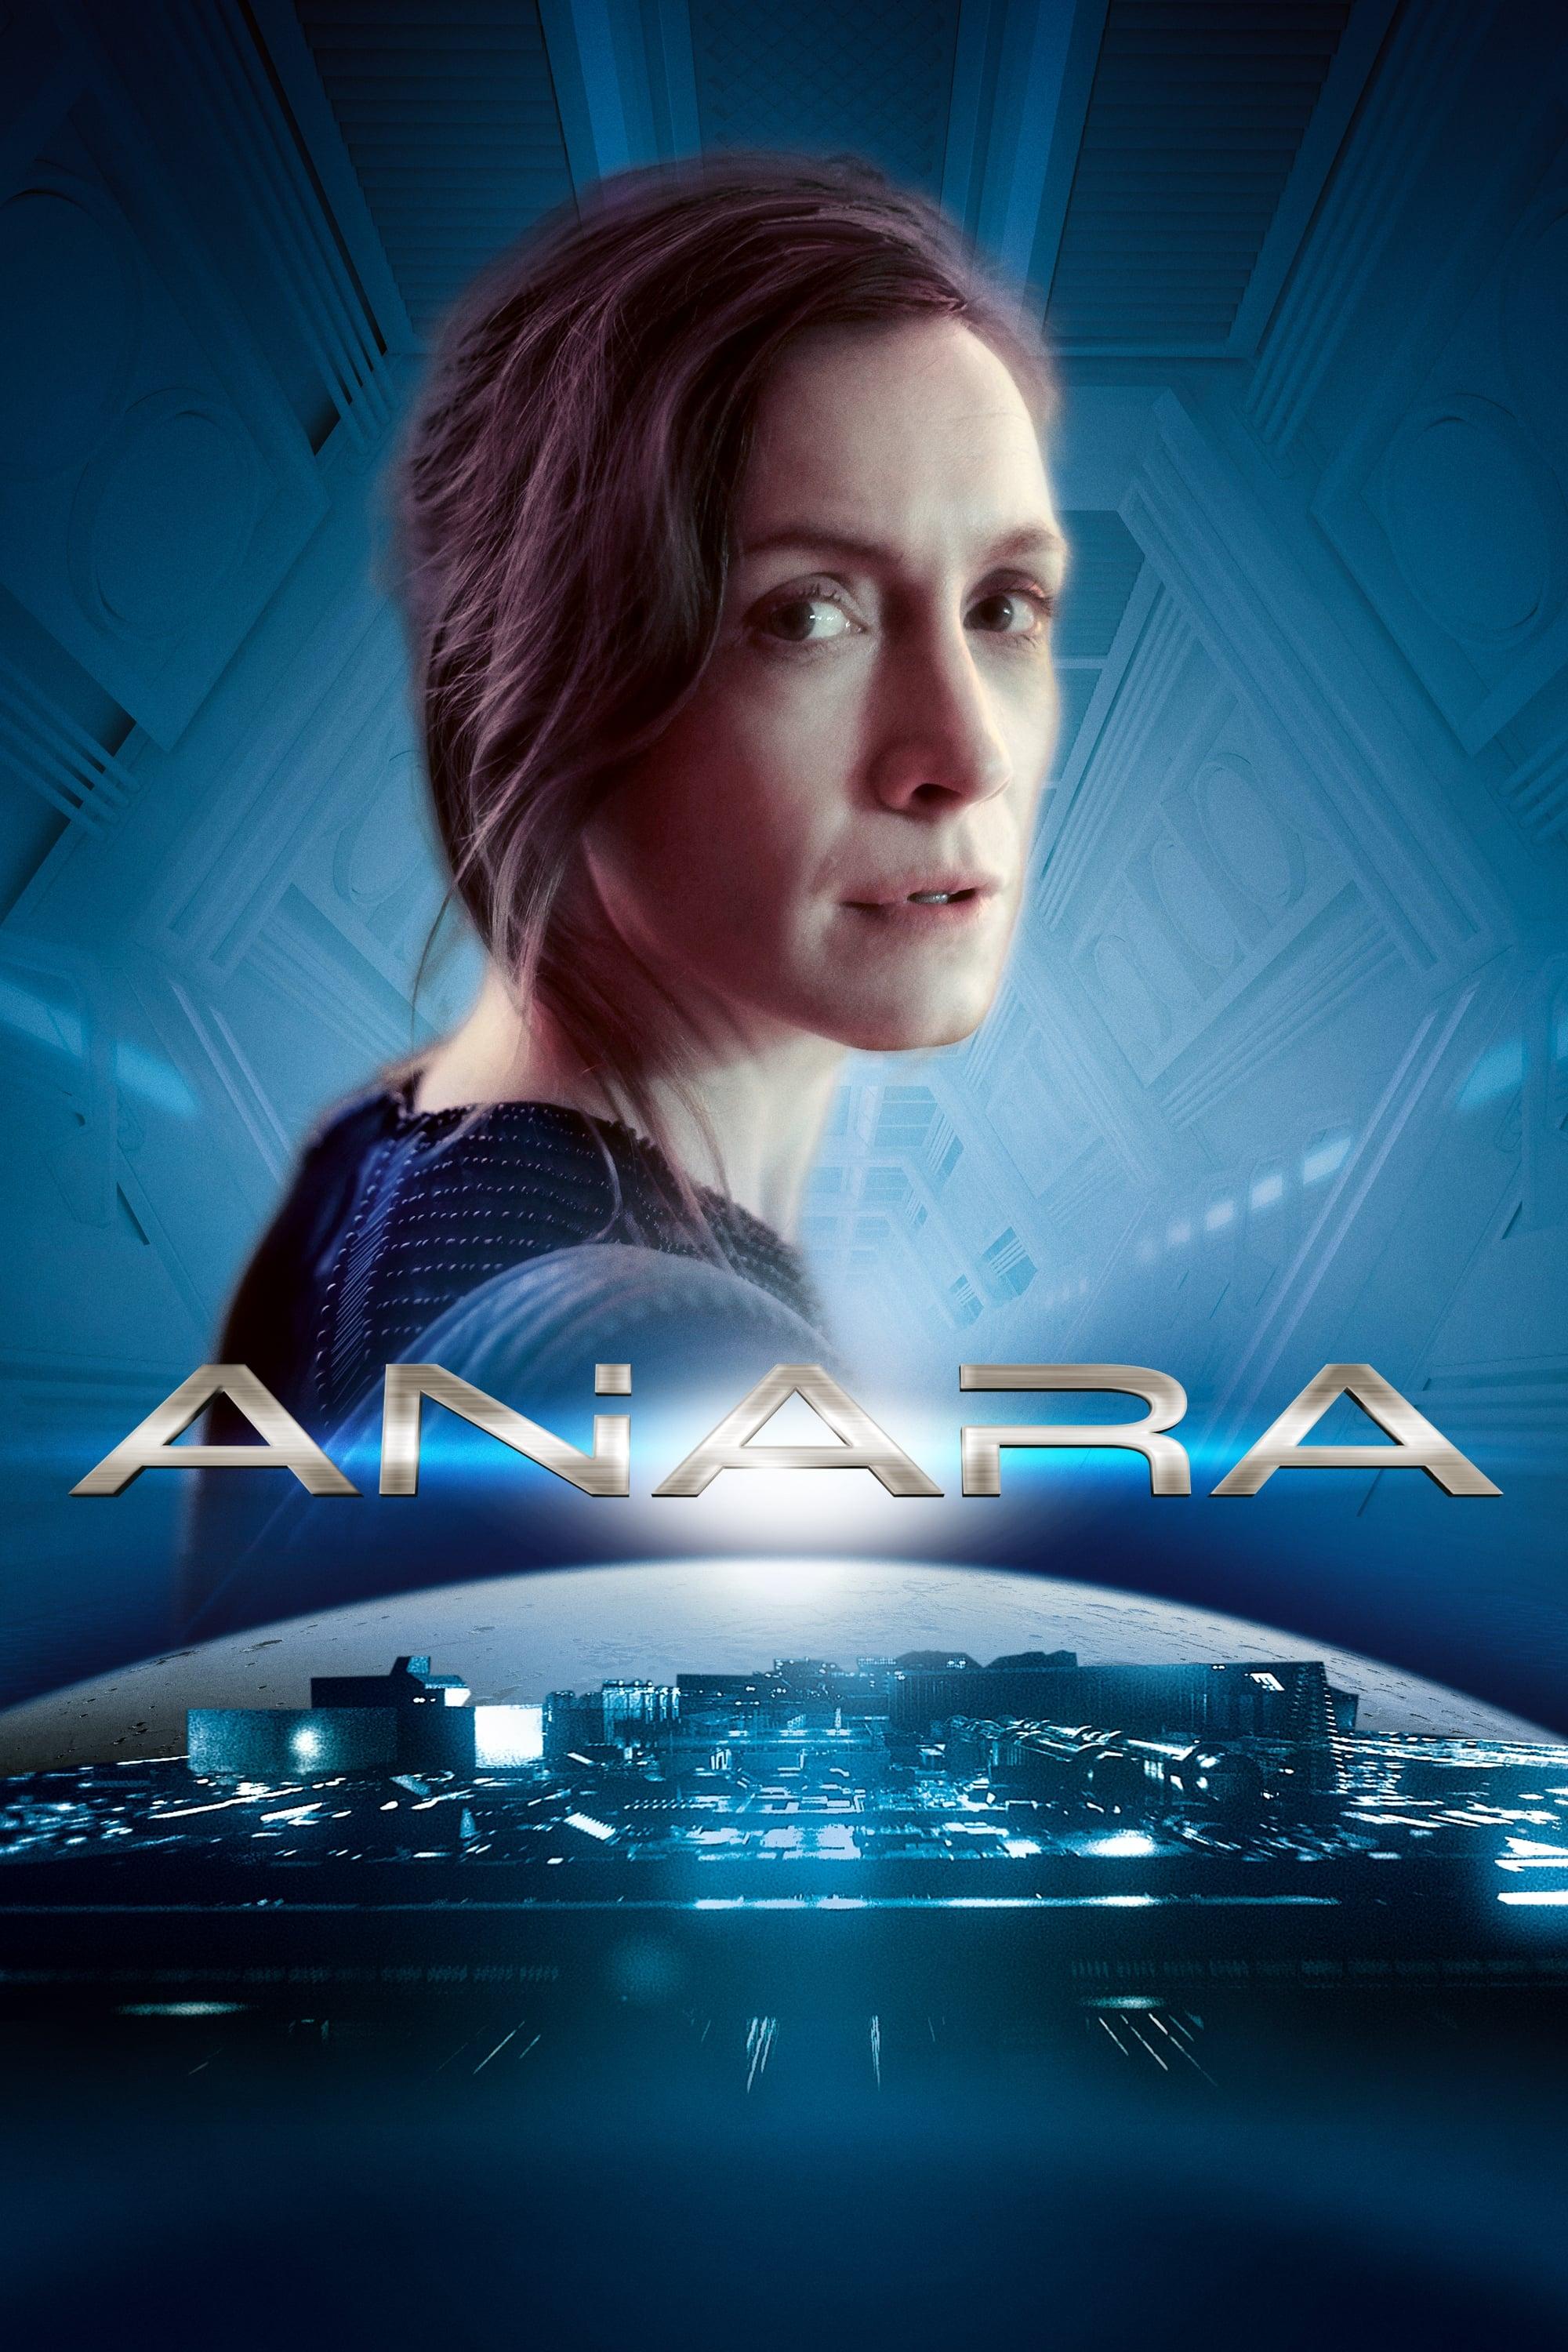 Aniara poster